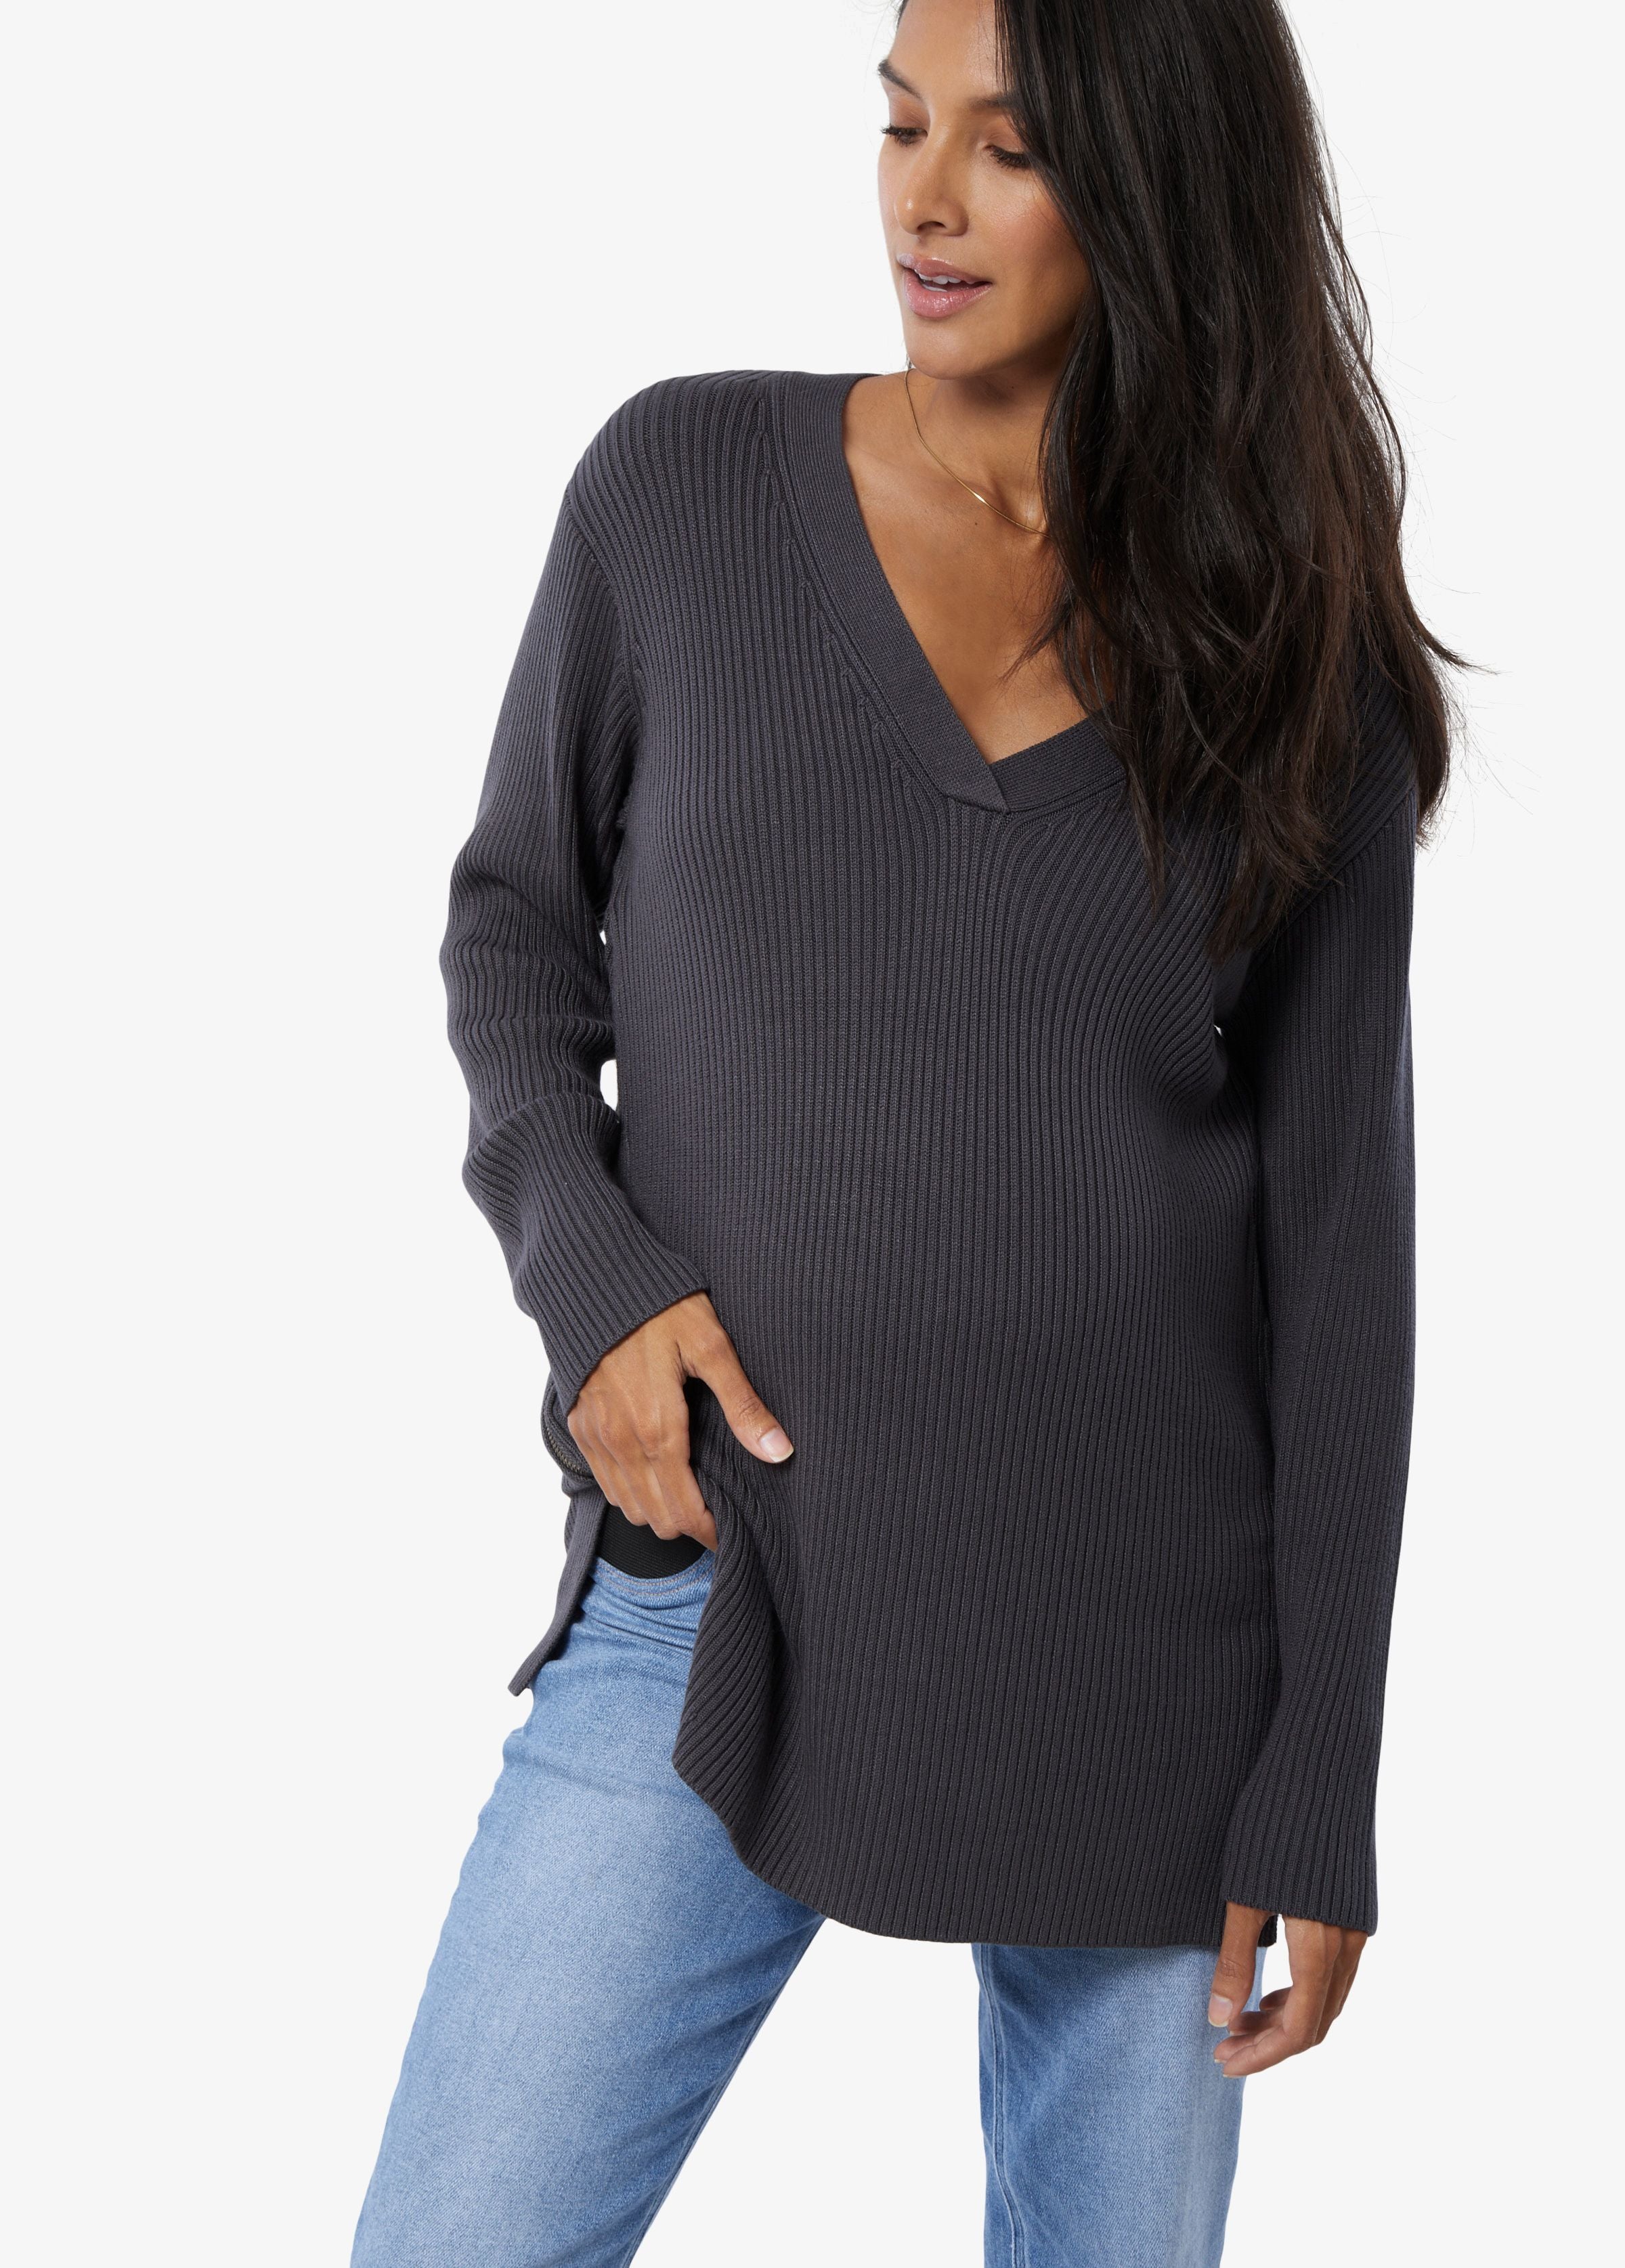 Side Zip Sweater in Asphalt by Ingrid & Isabel – Special Addition